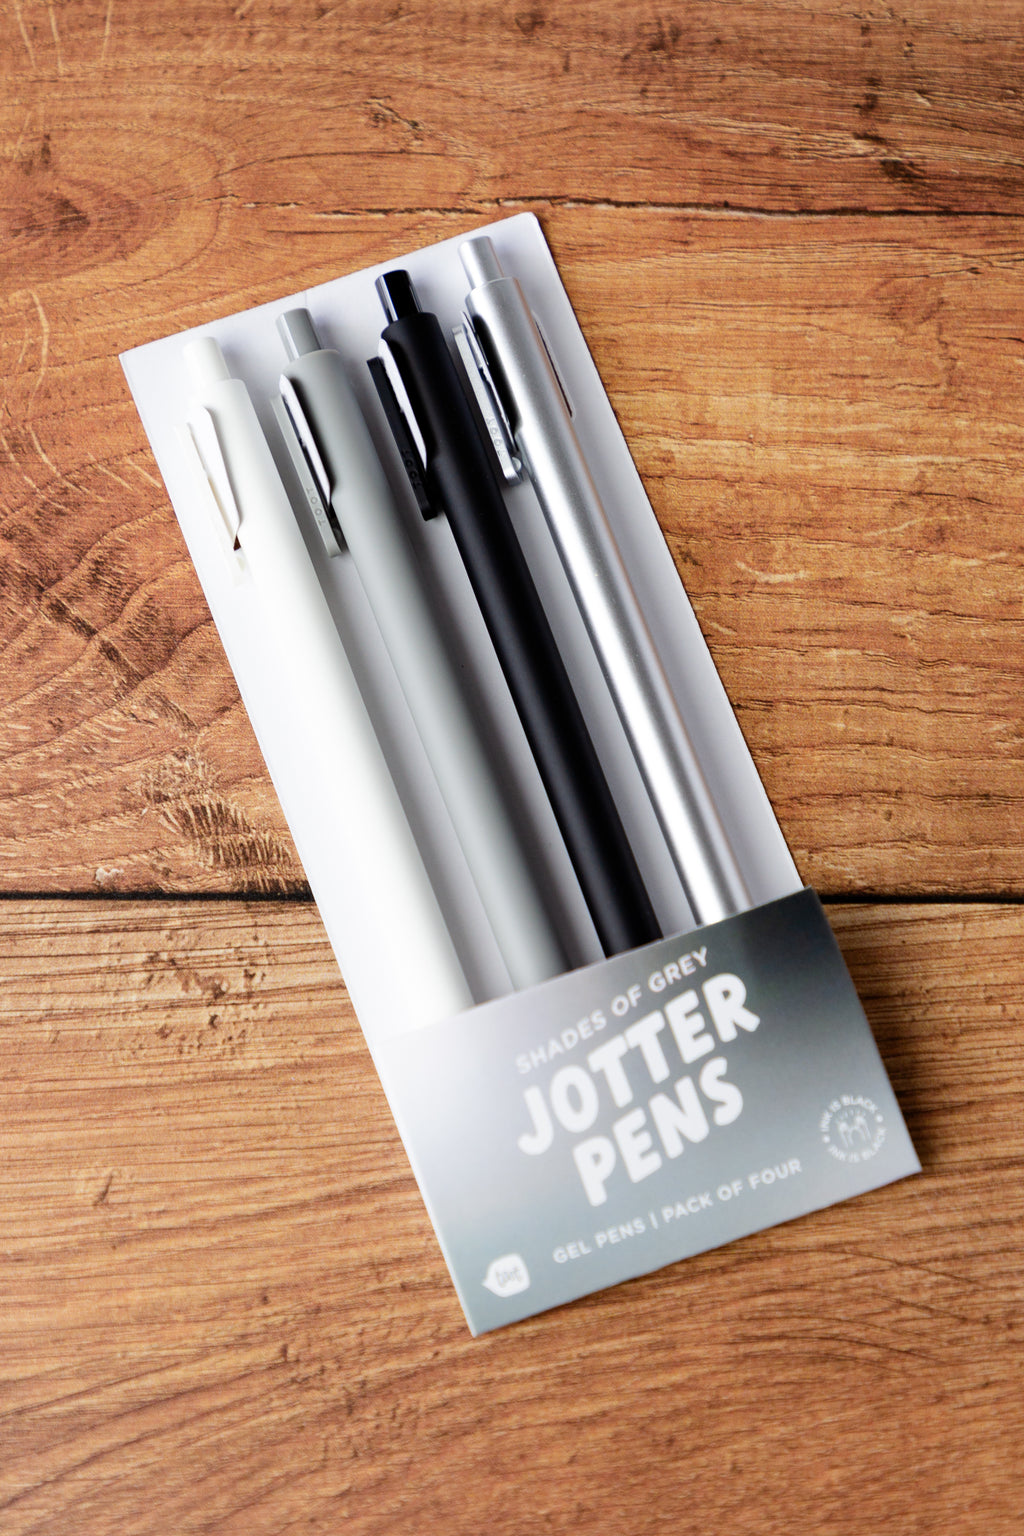 Jotter Pens - Set of 4